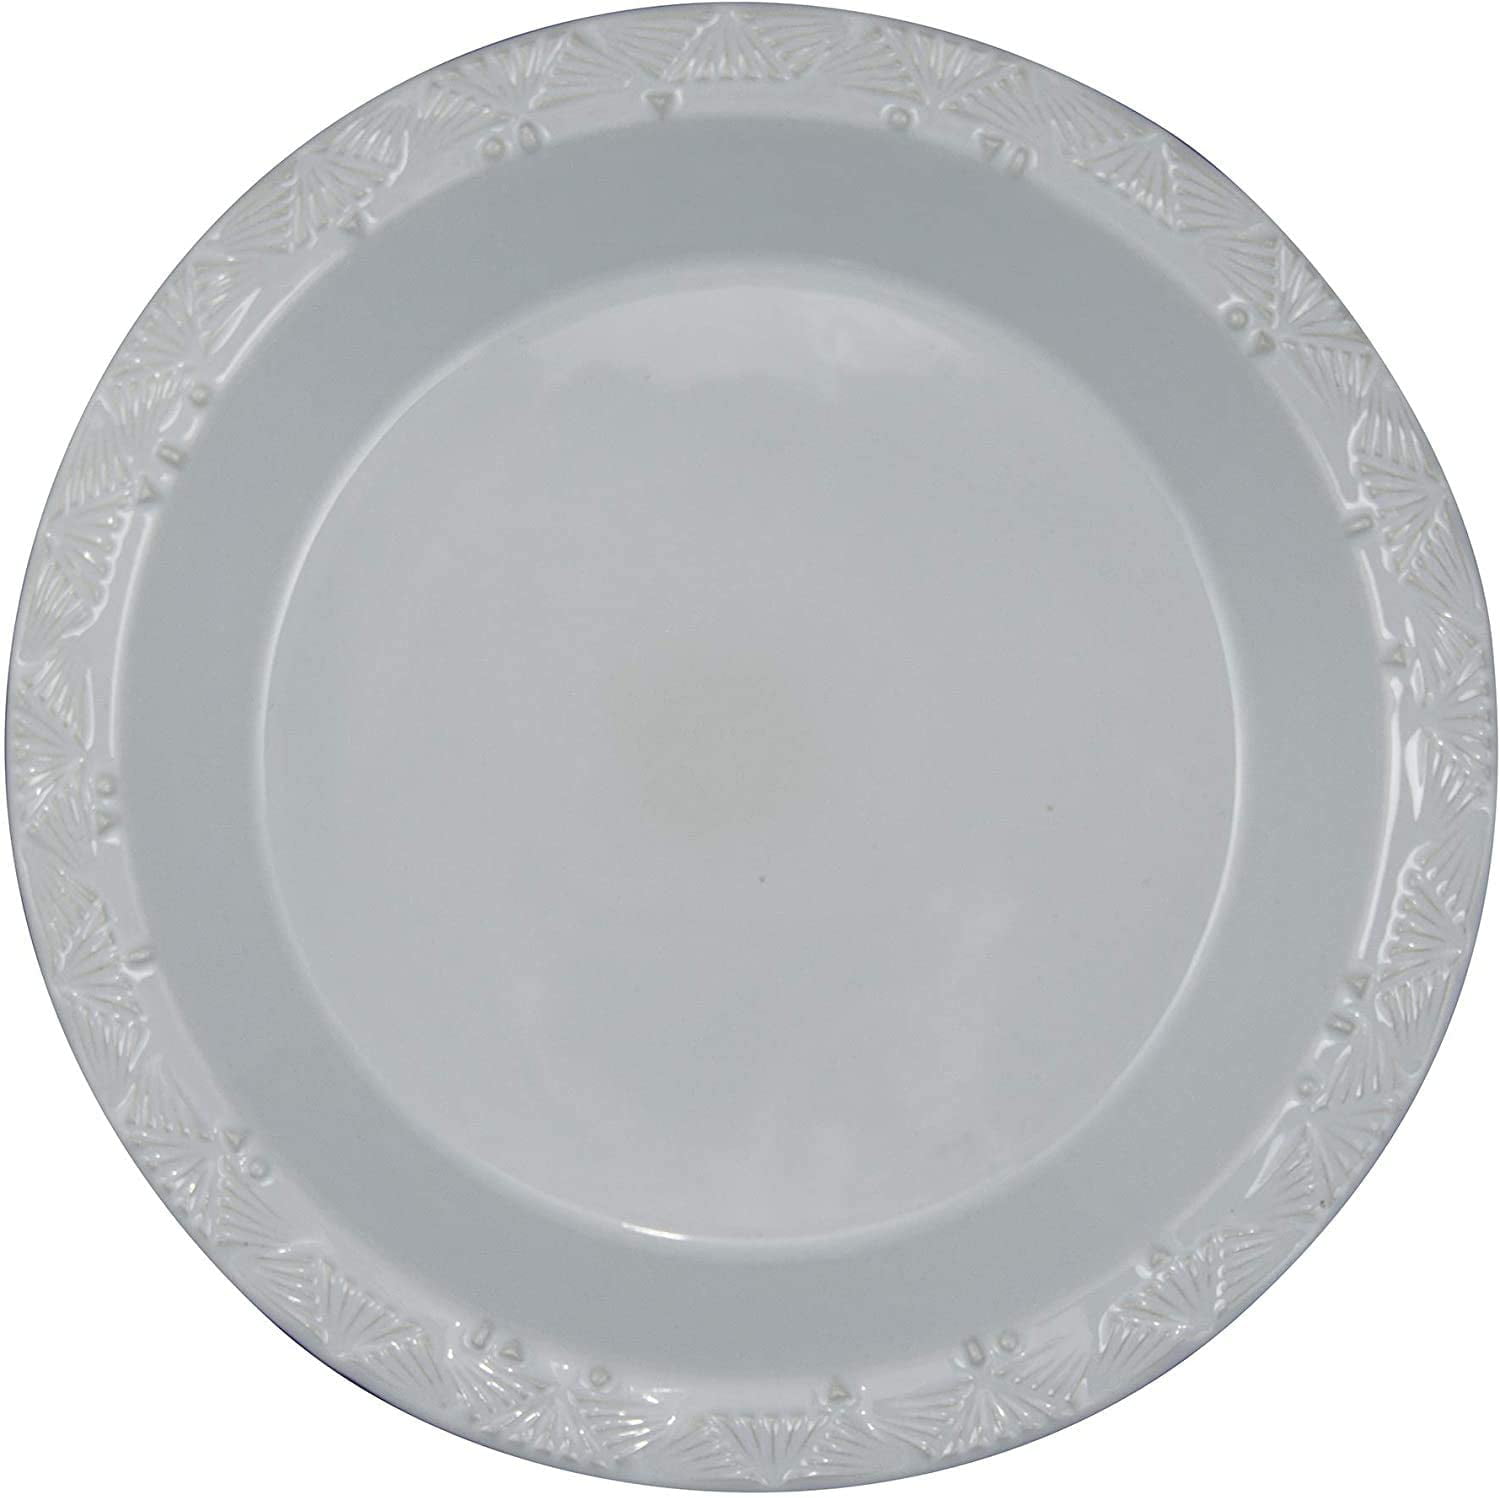 28cm Snack Size Embossed Foil Platter Serving Dish Aluminium Silver Tray 